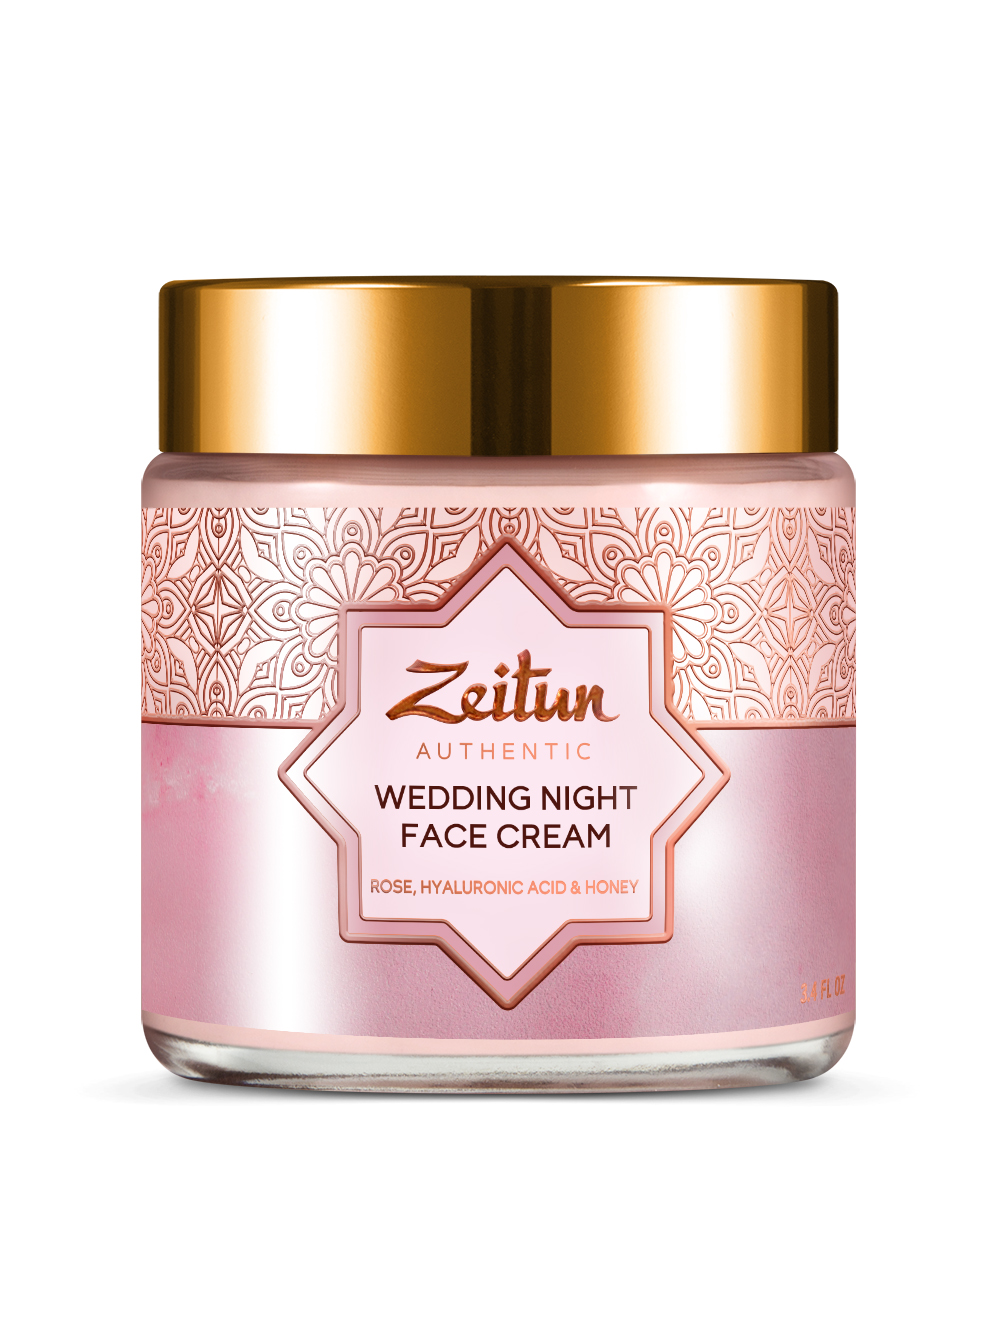 Zeitun Ночной питательный крем Wedding Day, 100 мл (Zeitun, Authentic) крем для лица zeitun ночной питательный крем wedding day